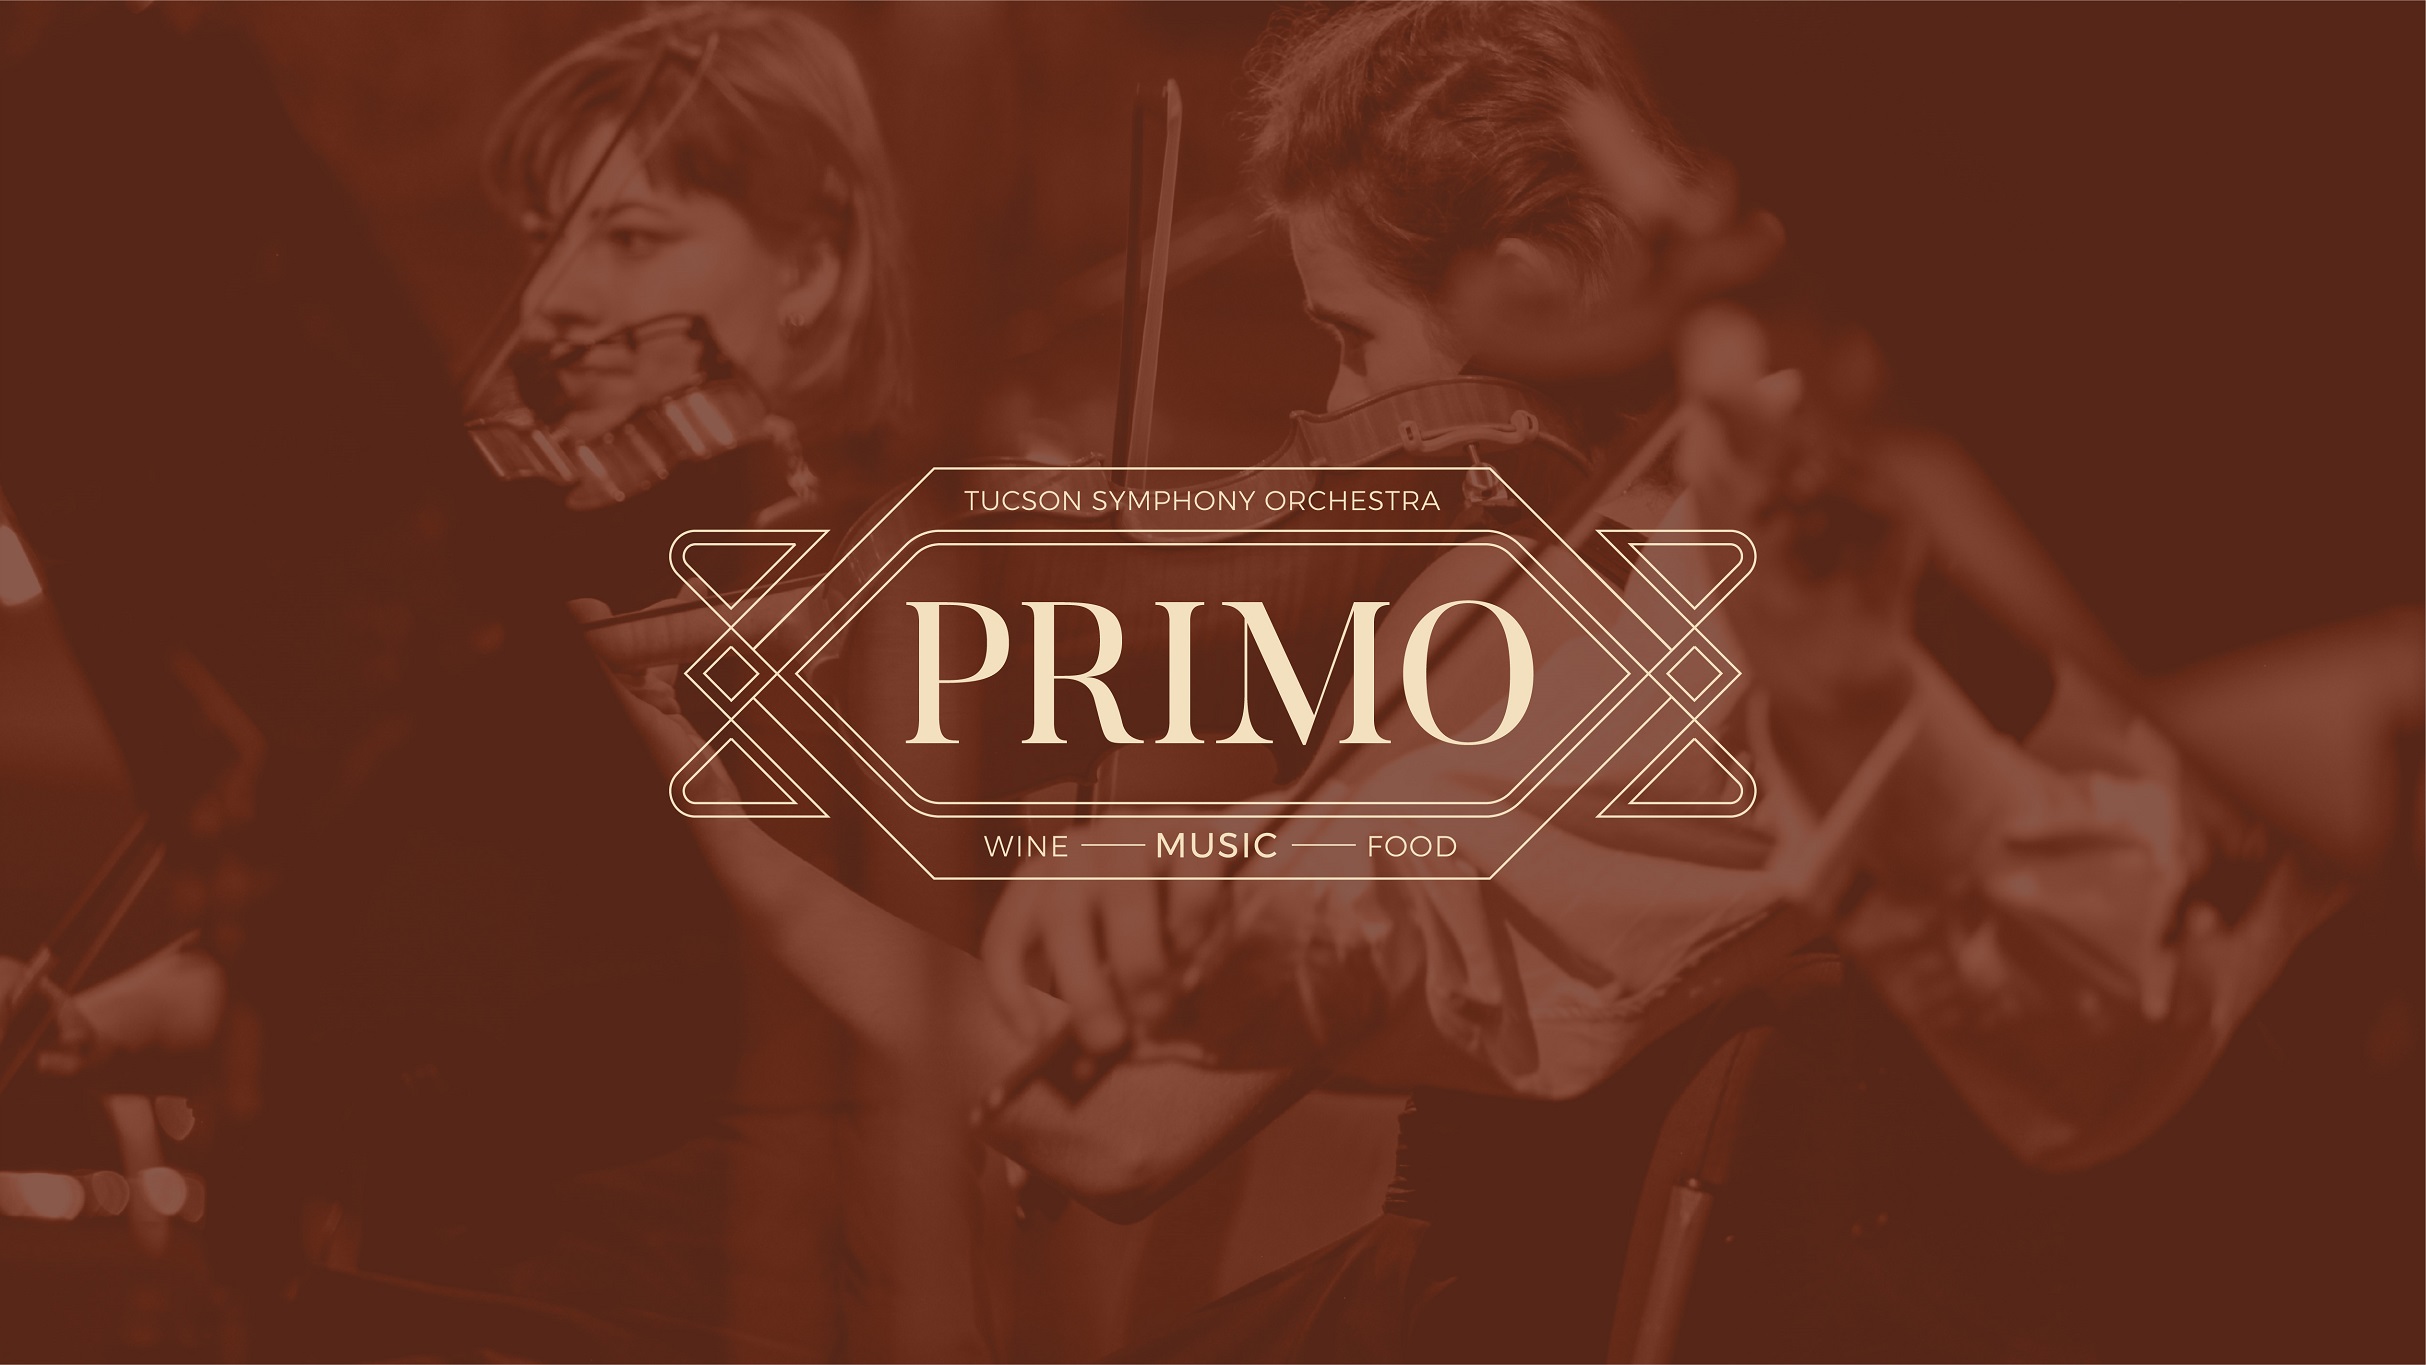 Tucson Symphony Orchestra PRIMO: Wine - Music - Food